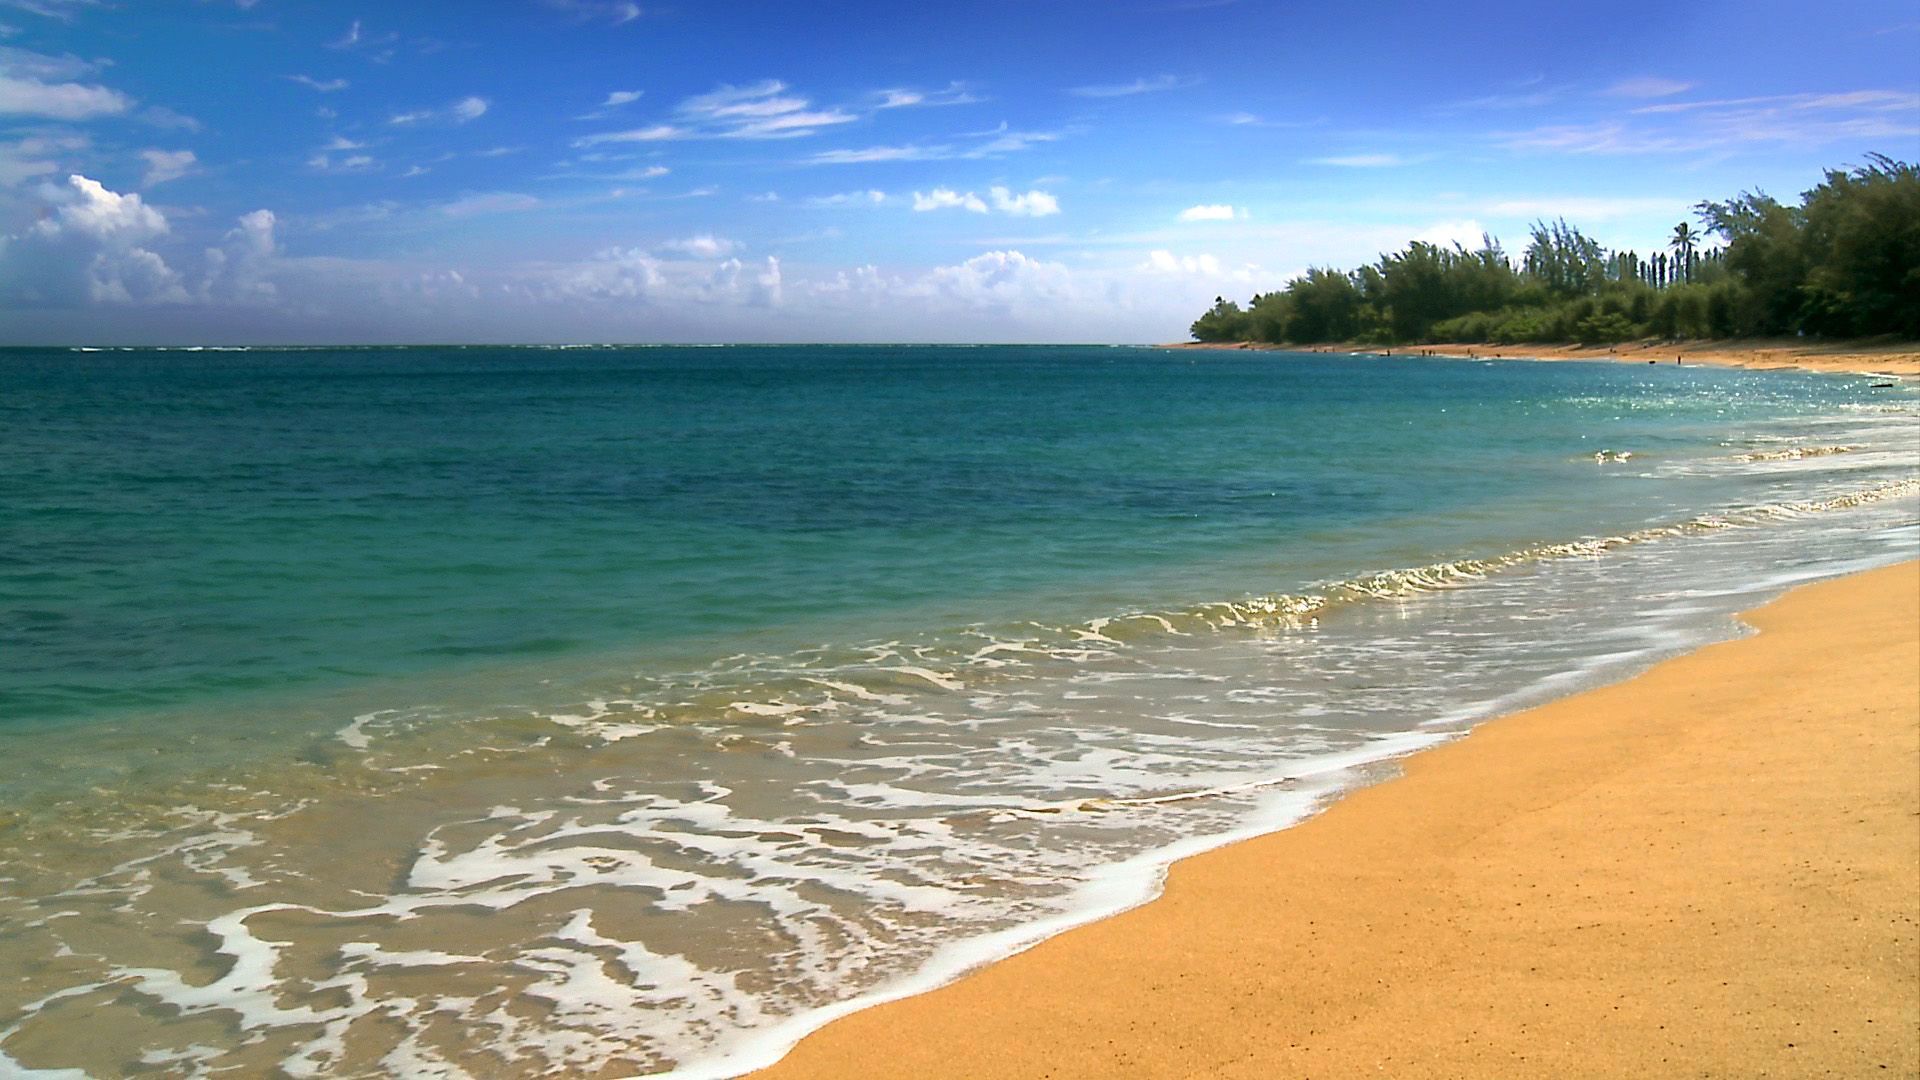 Hawaii beach background